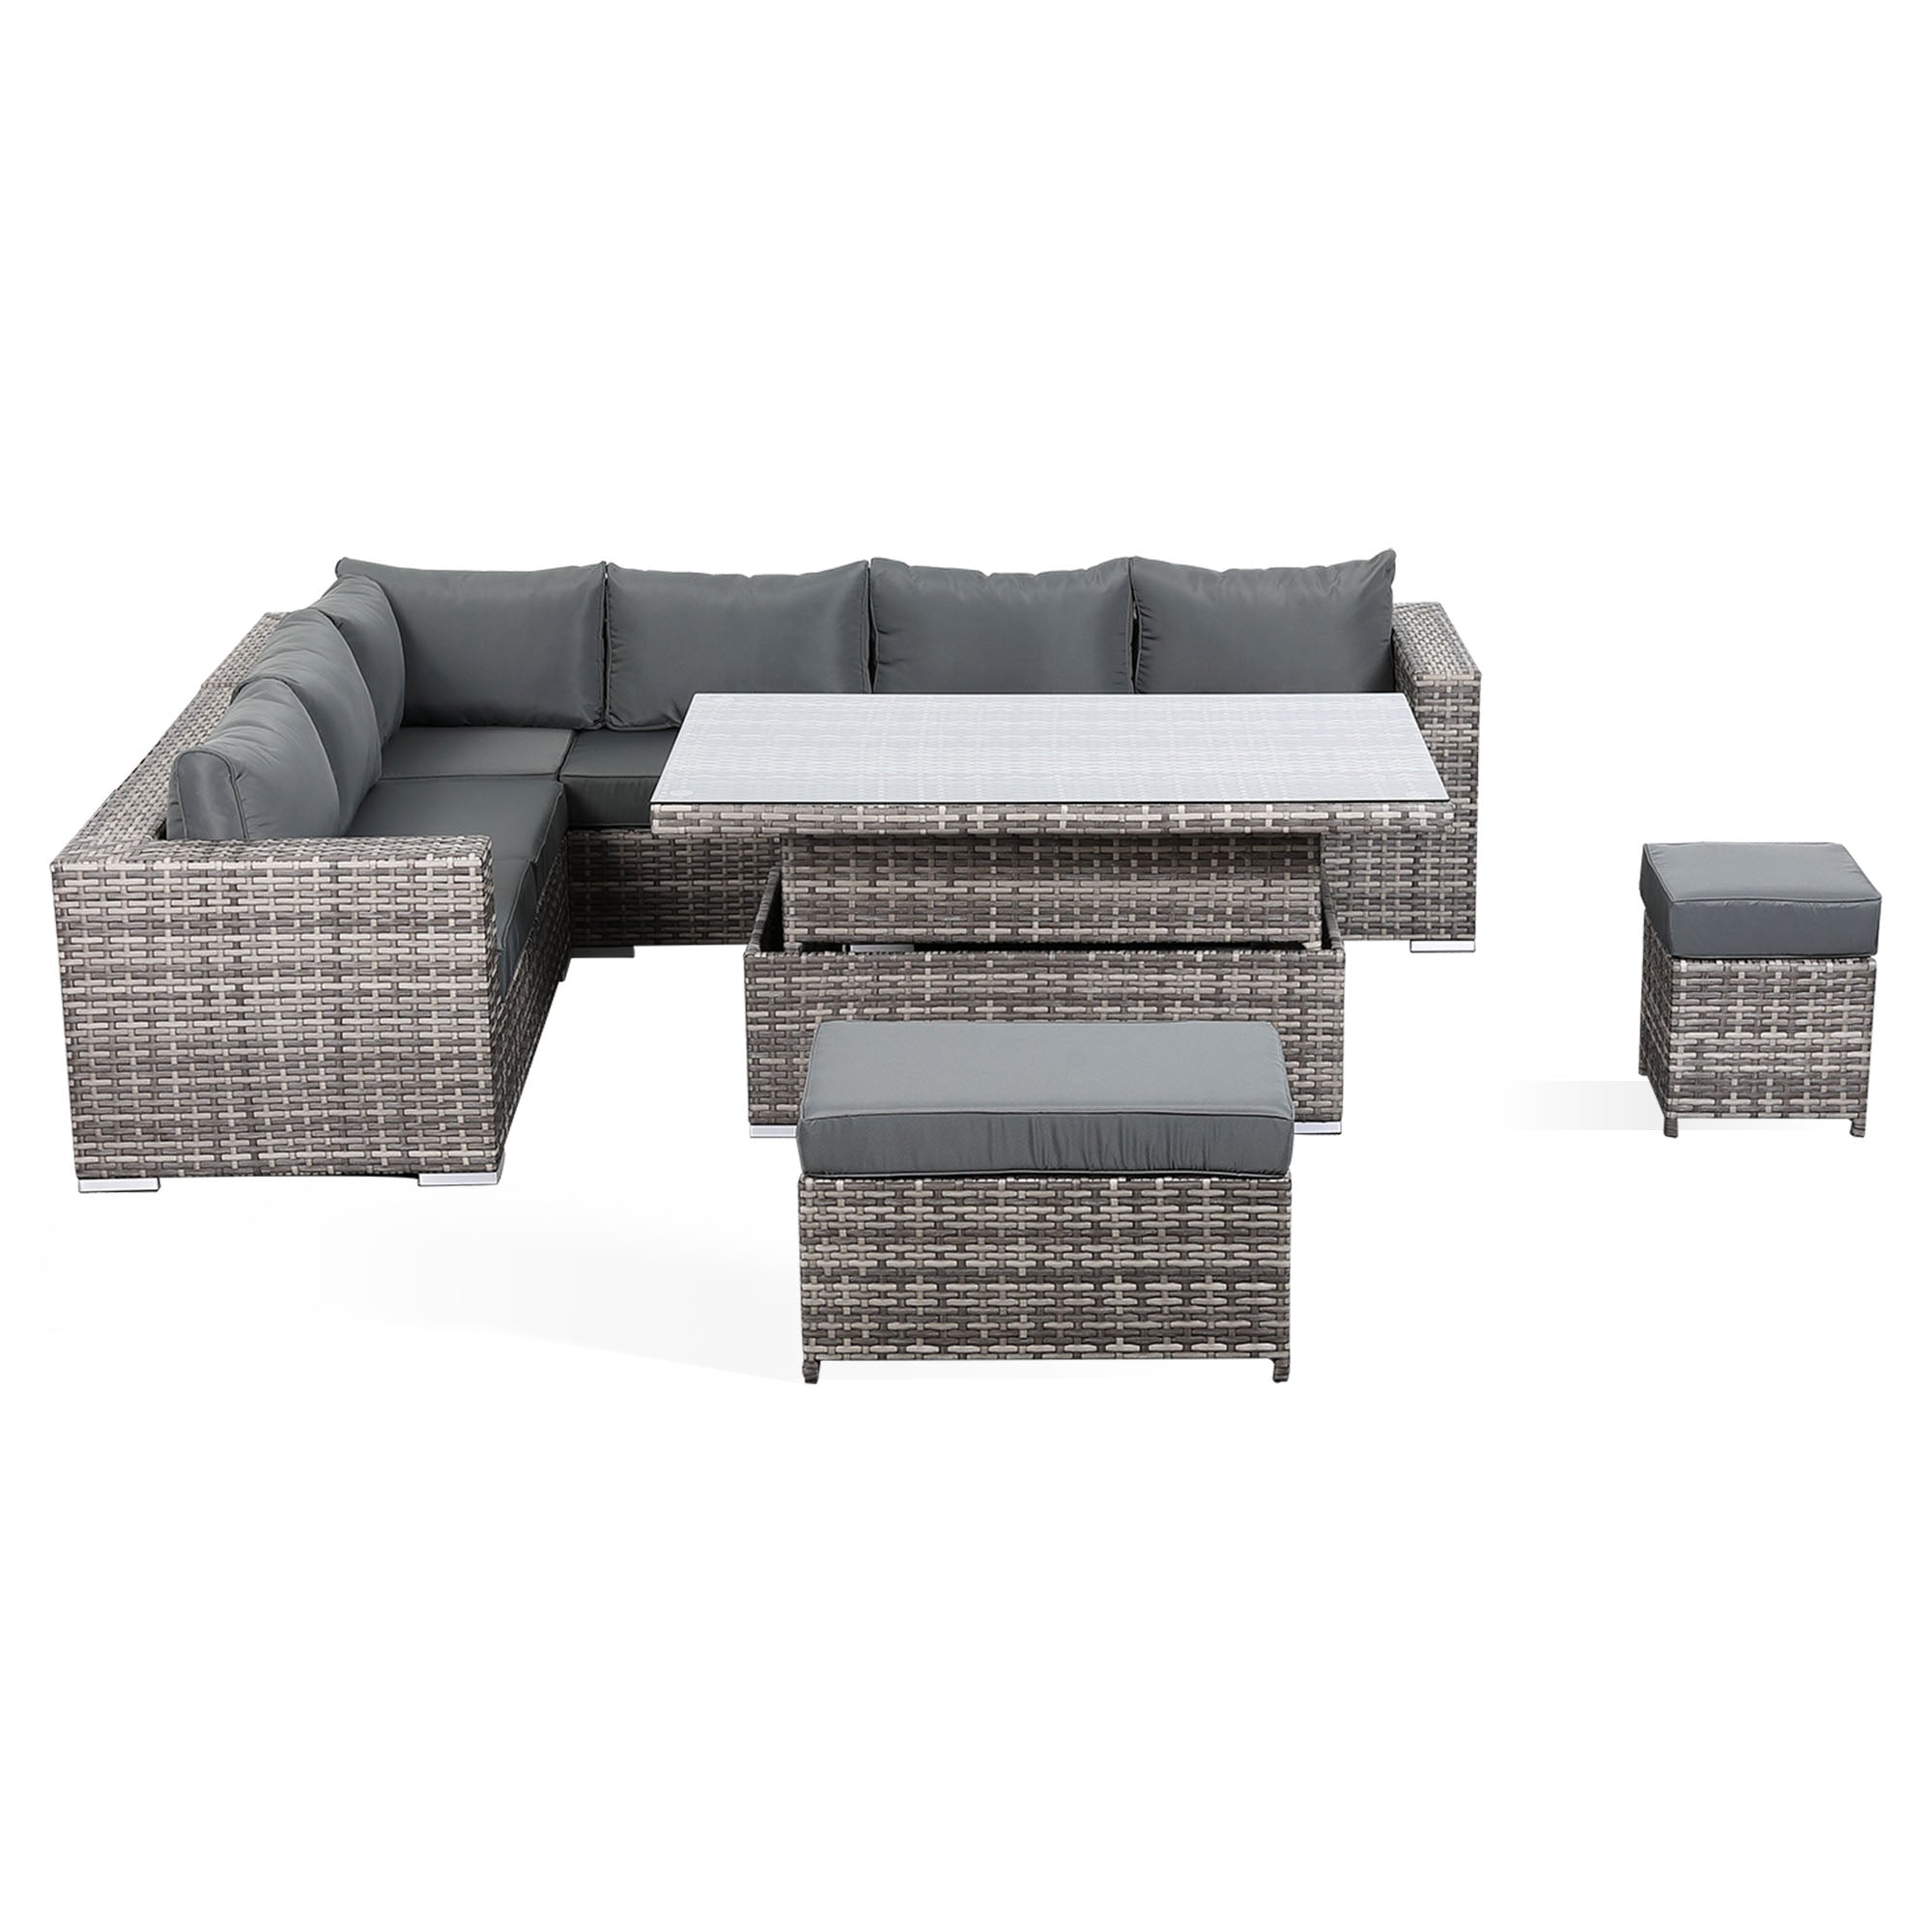 Rattan Park Colette Range Aluminium  Frame  Modular Corner Sofa with Rising Table in Medium Grey Weave